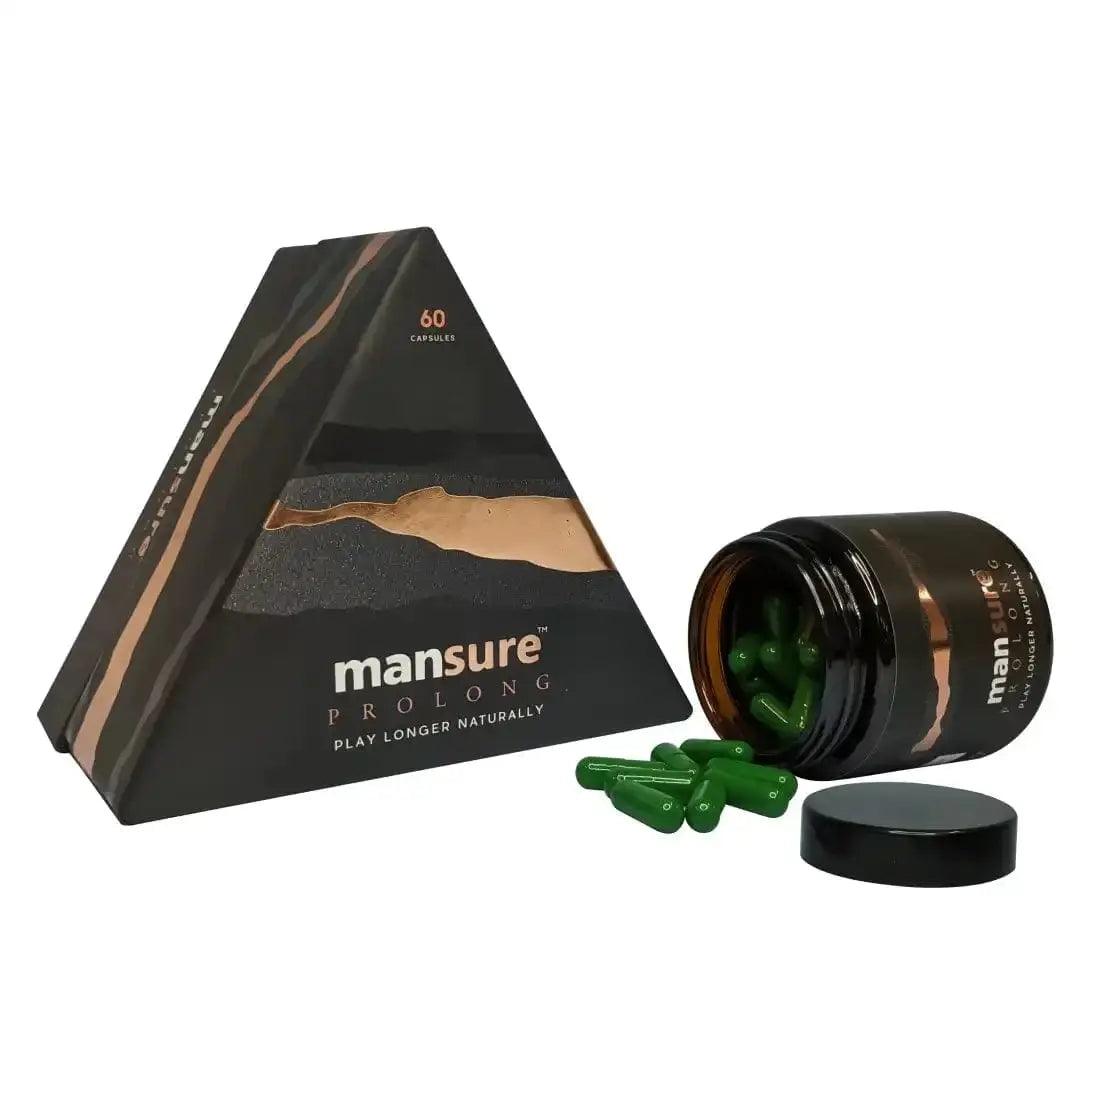 ManSure PROLONG for Men's Health - 60 Capsules 8906116280485